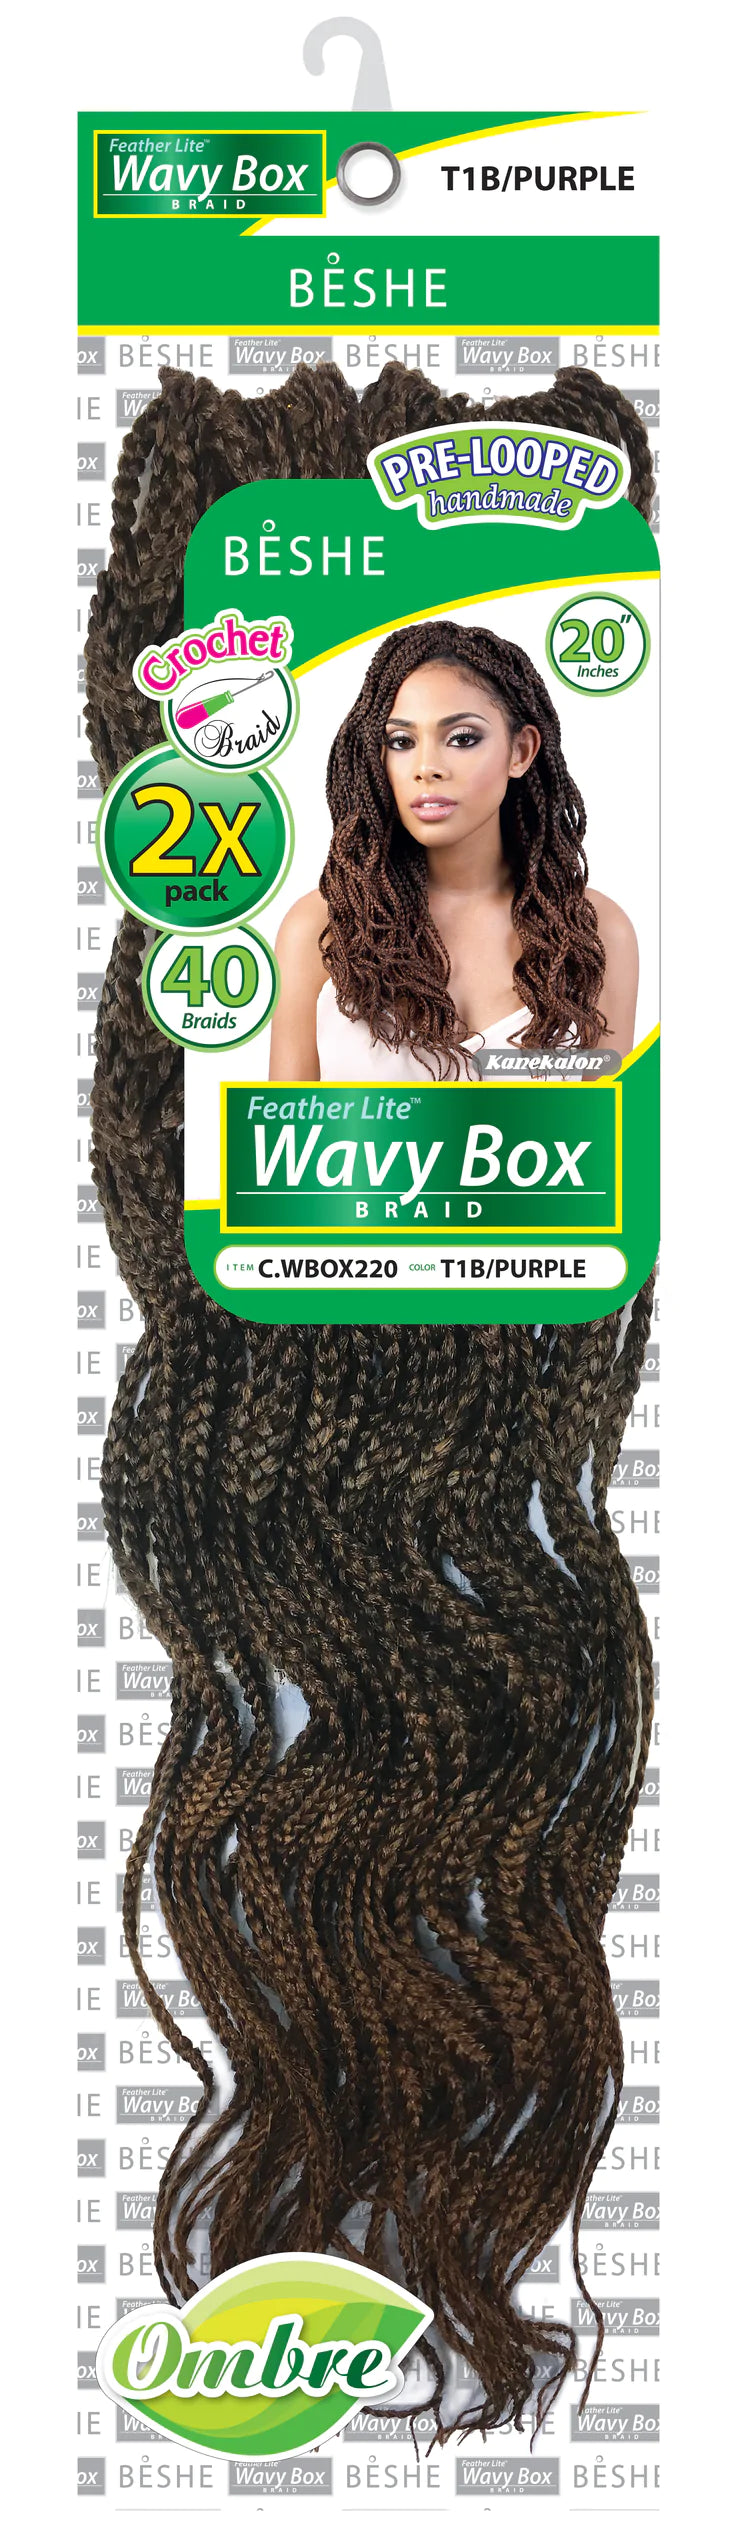 Beshe Crochet Braid Feather Lite 2x Wavy Box Braid 20" C.WBOX220 - Elevate Styles